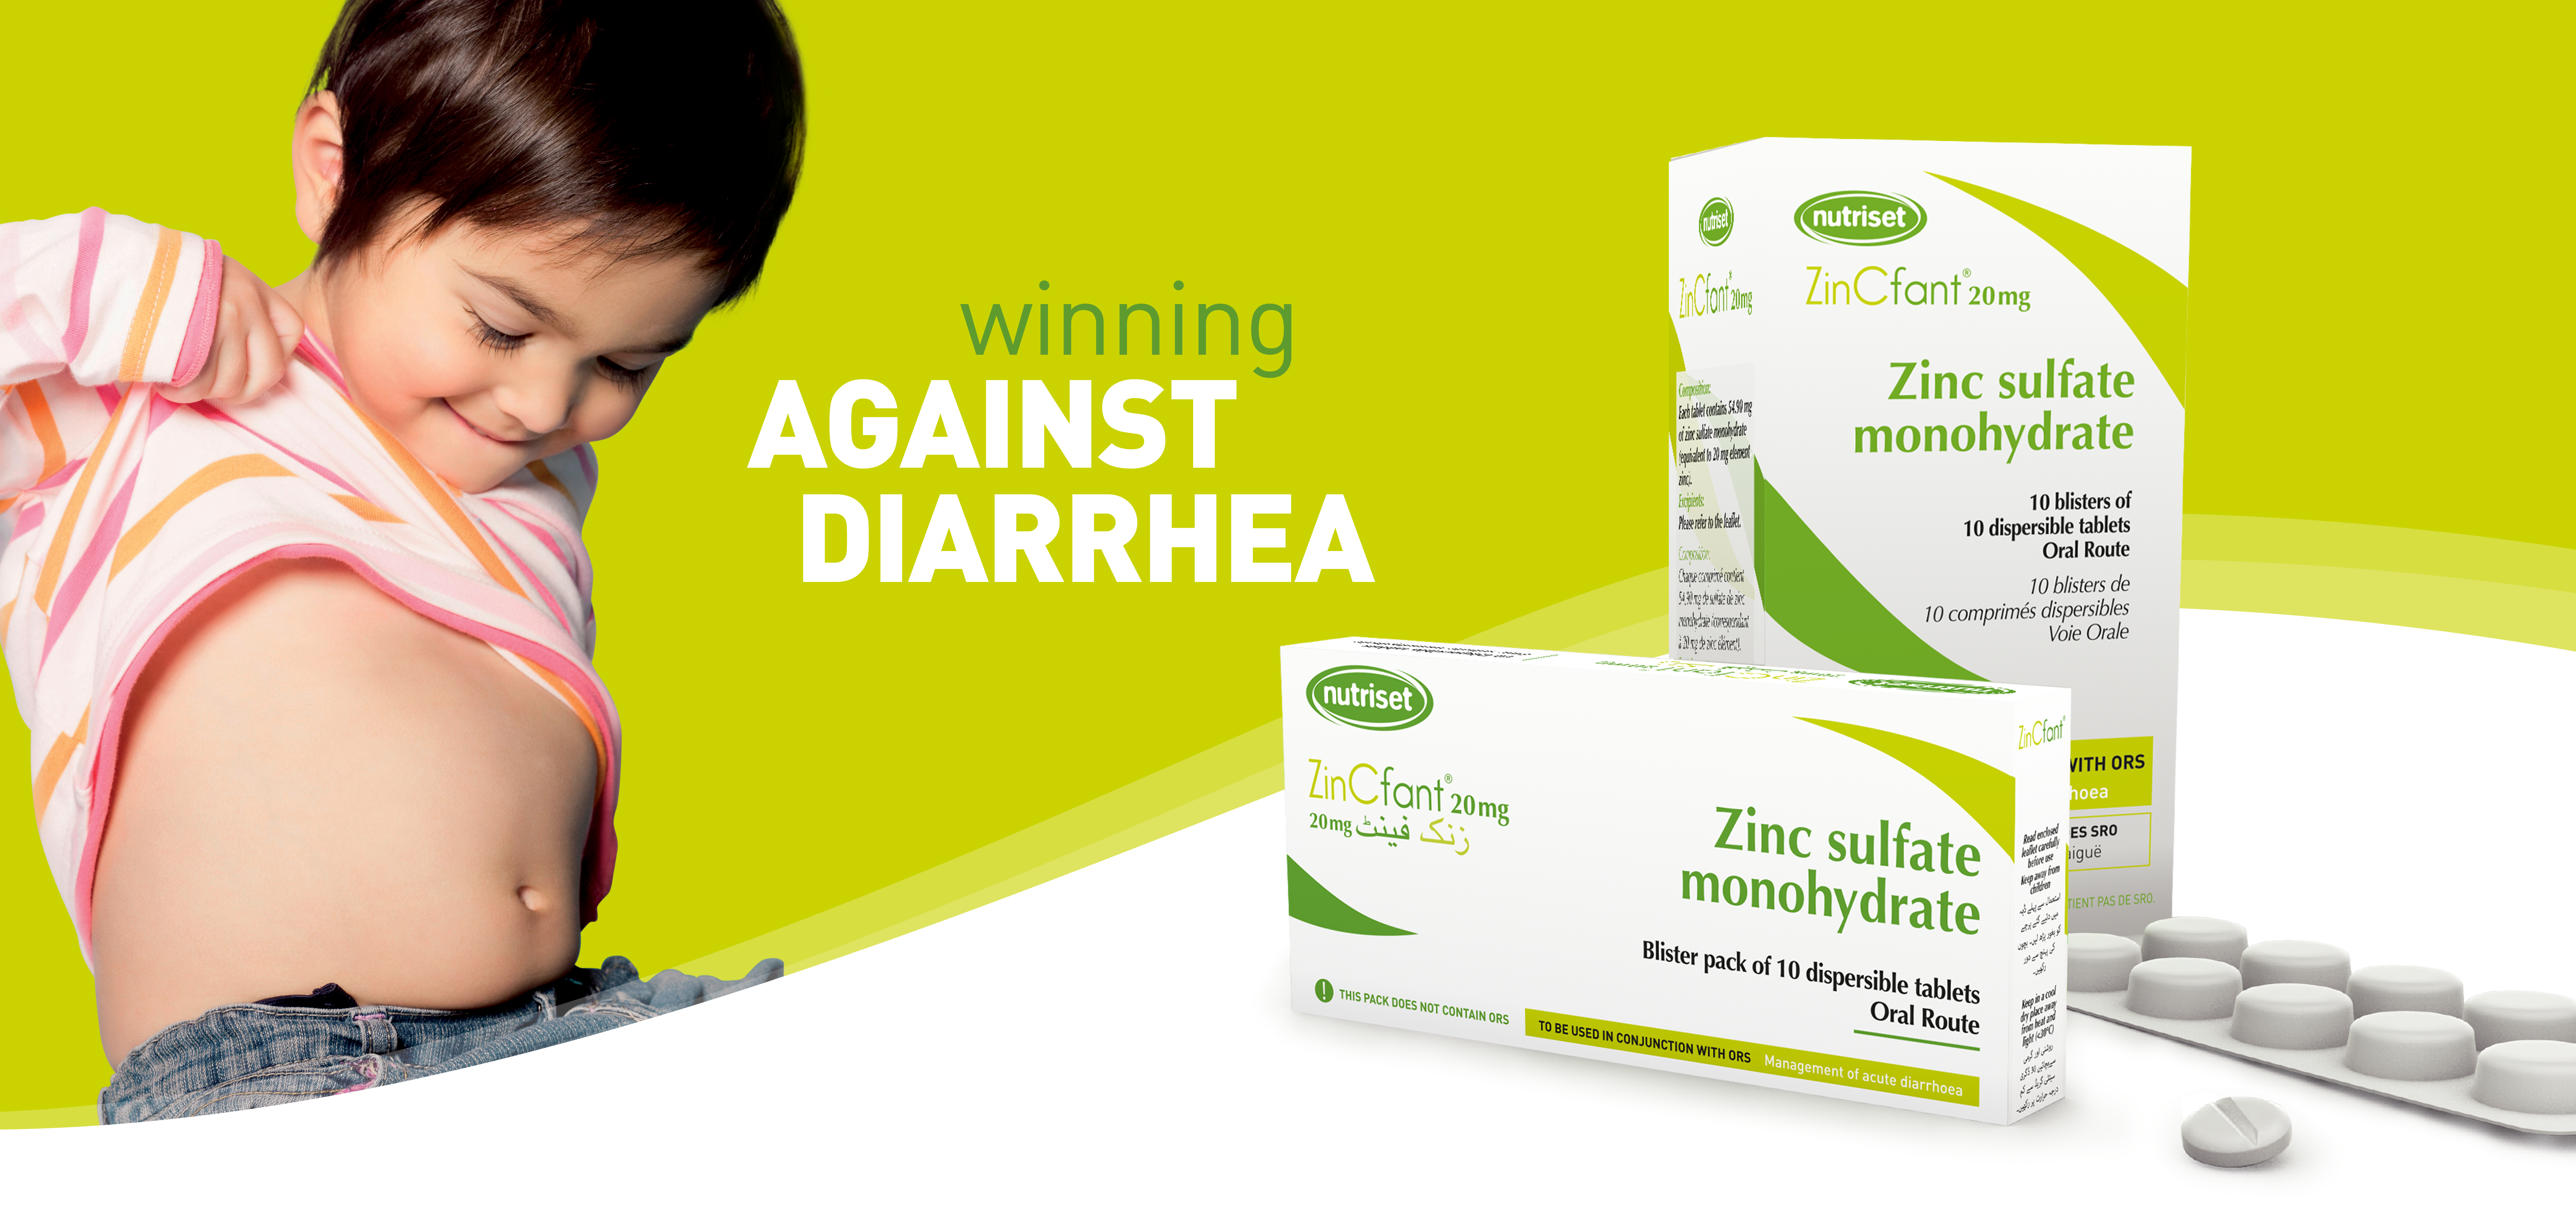 Winning against diarrhea with ZinCfant®